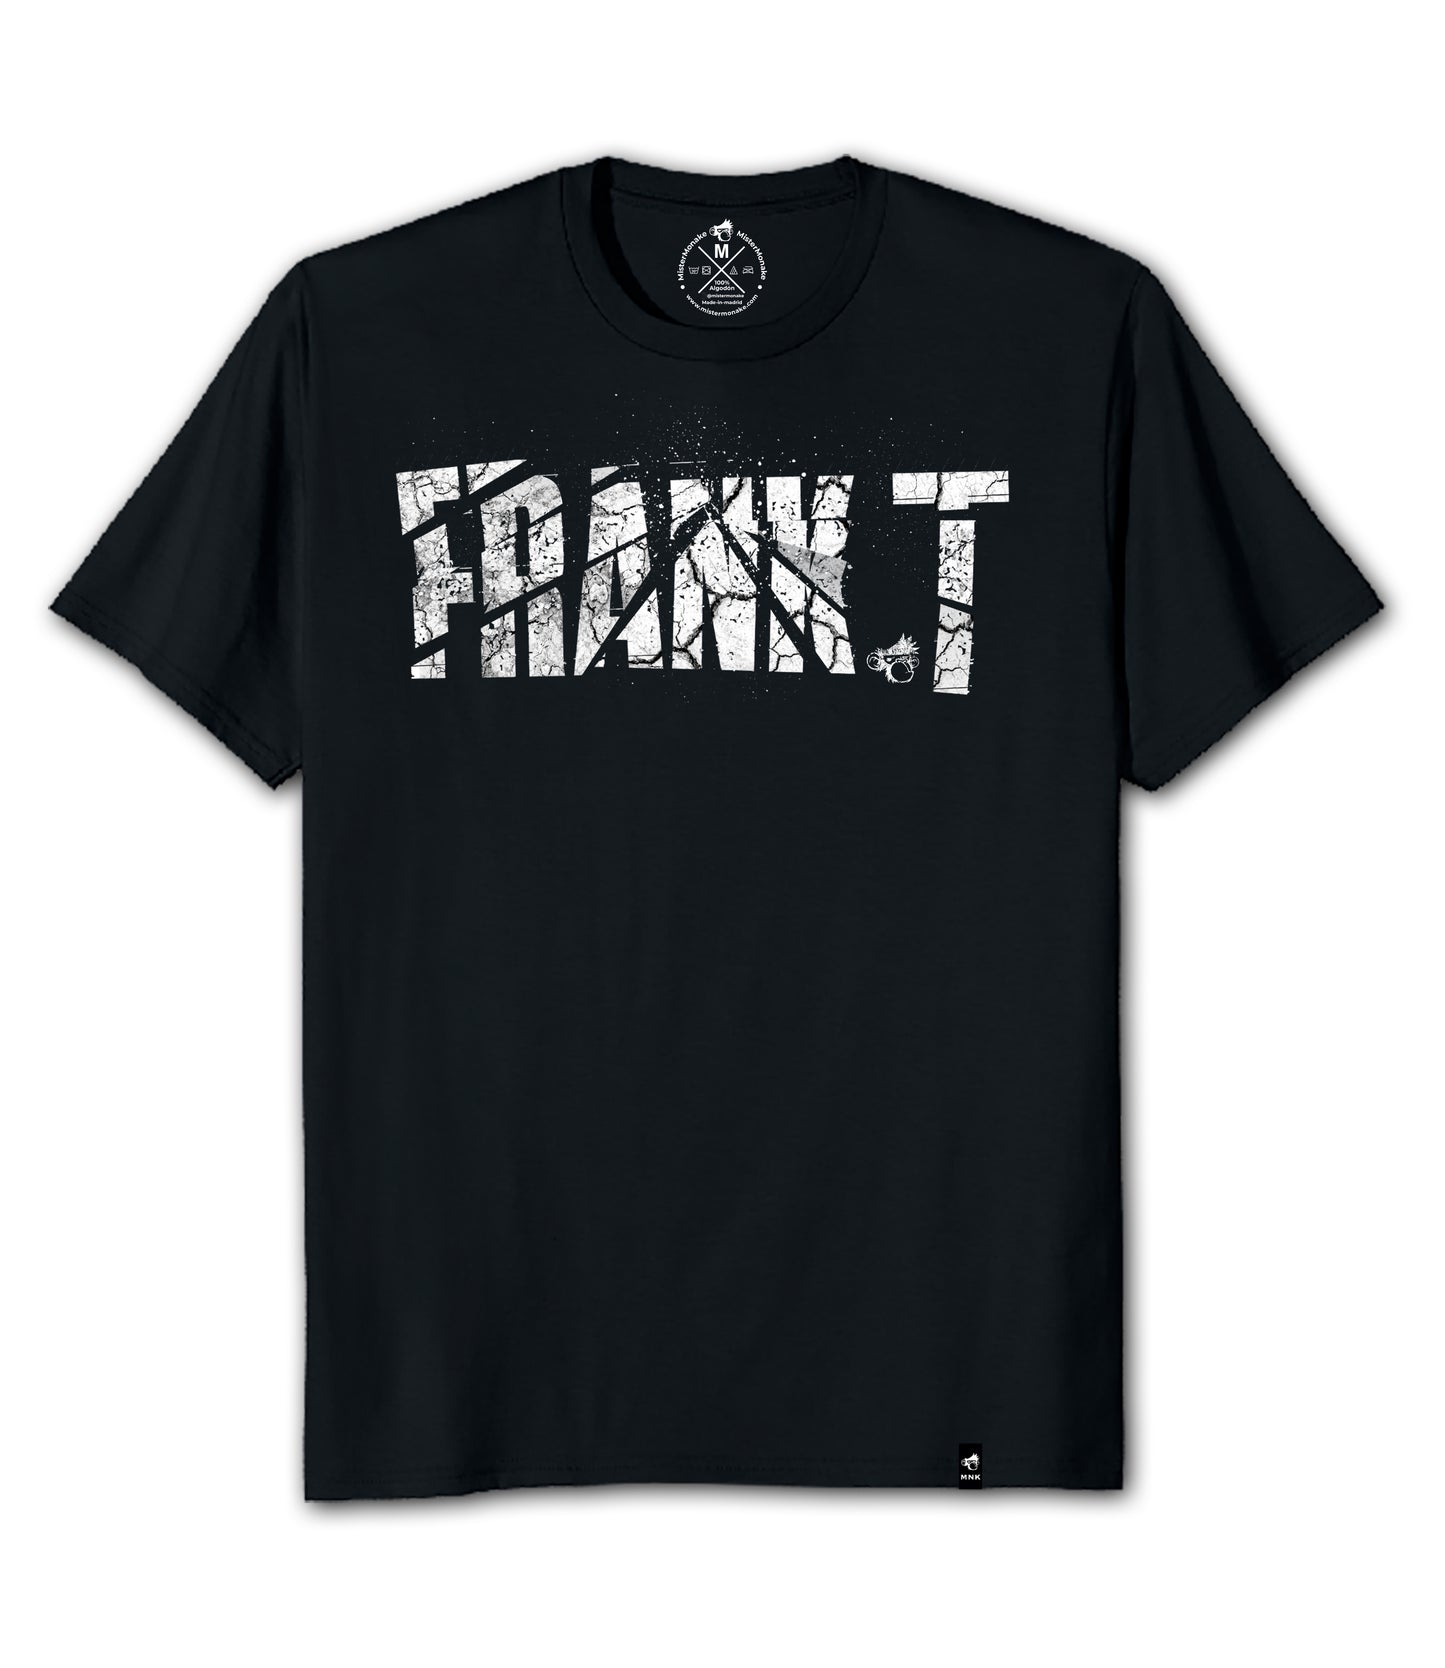 Camiseta Negra "Nuevo Ser" By FrankT